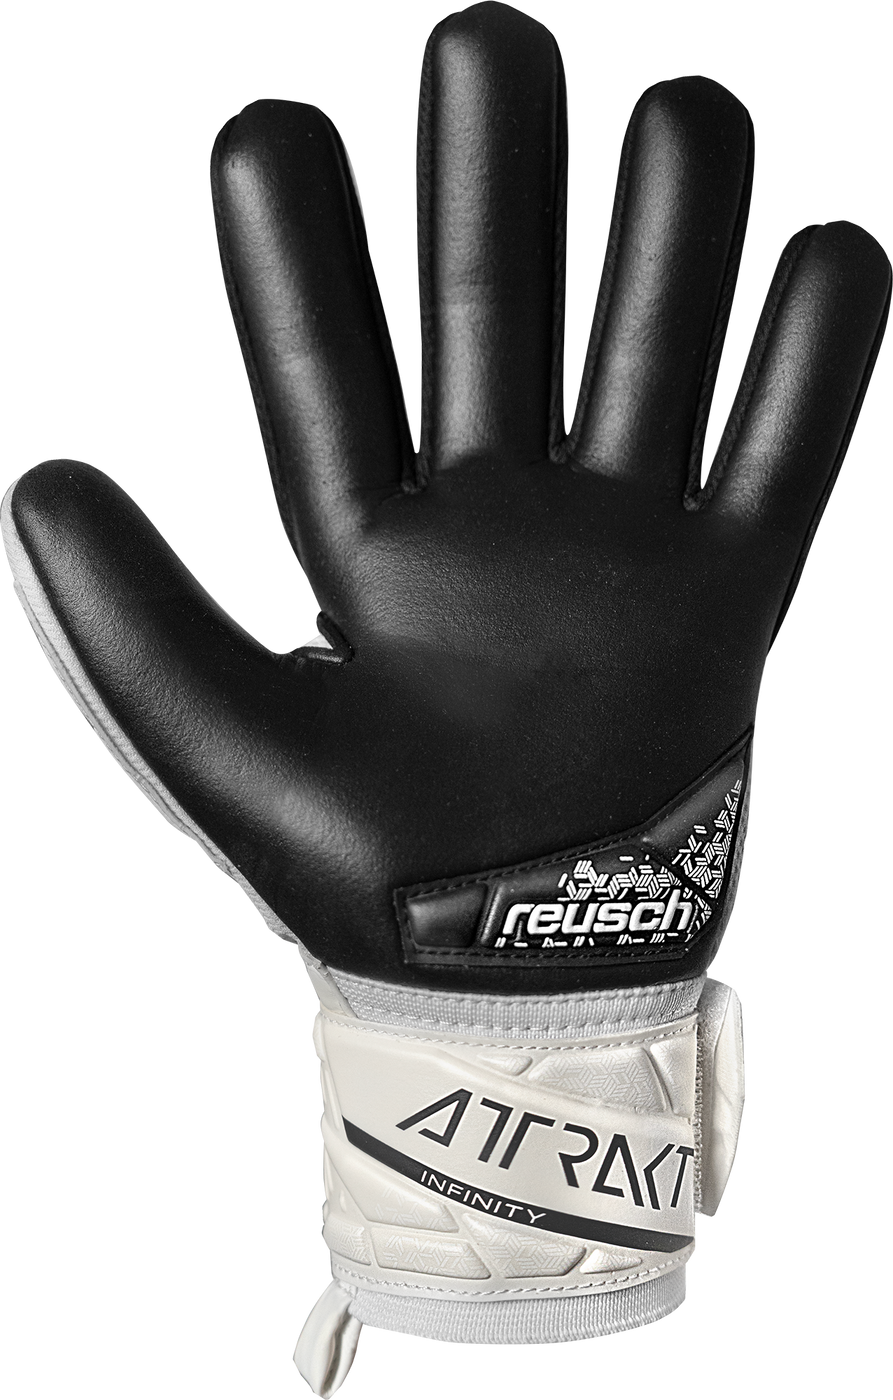 Воротарські рукавиці Reusch Attrakt Infinity NC White купити